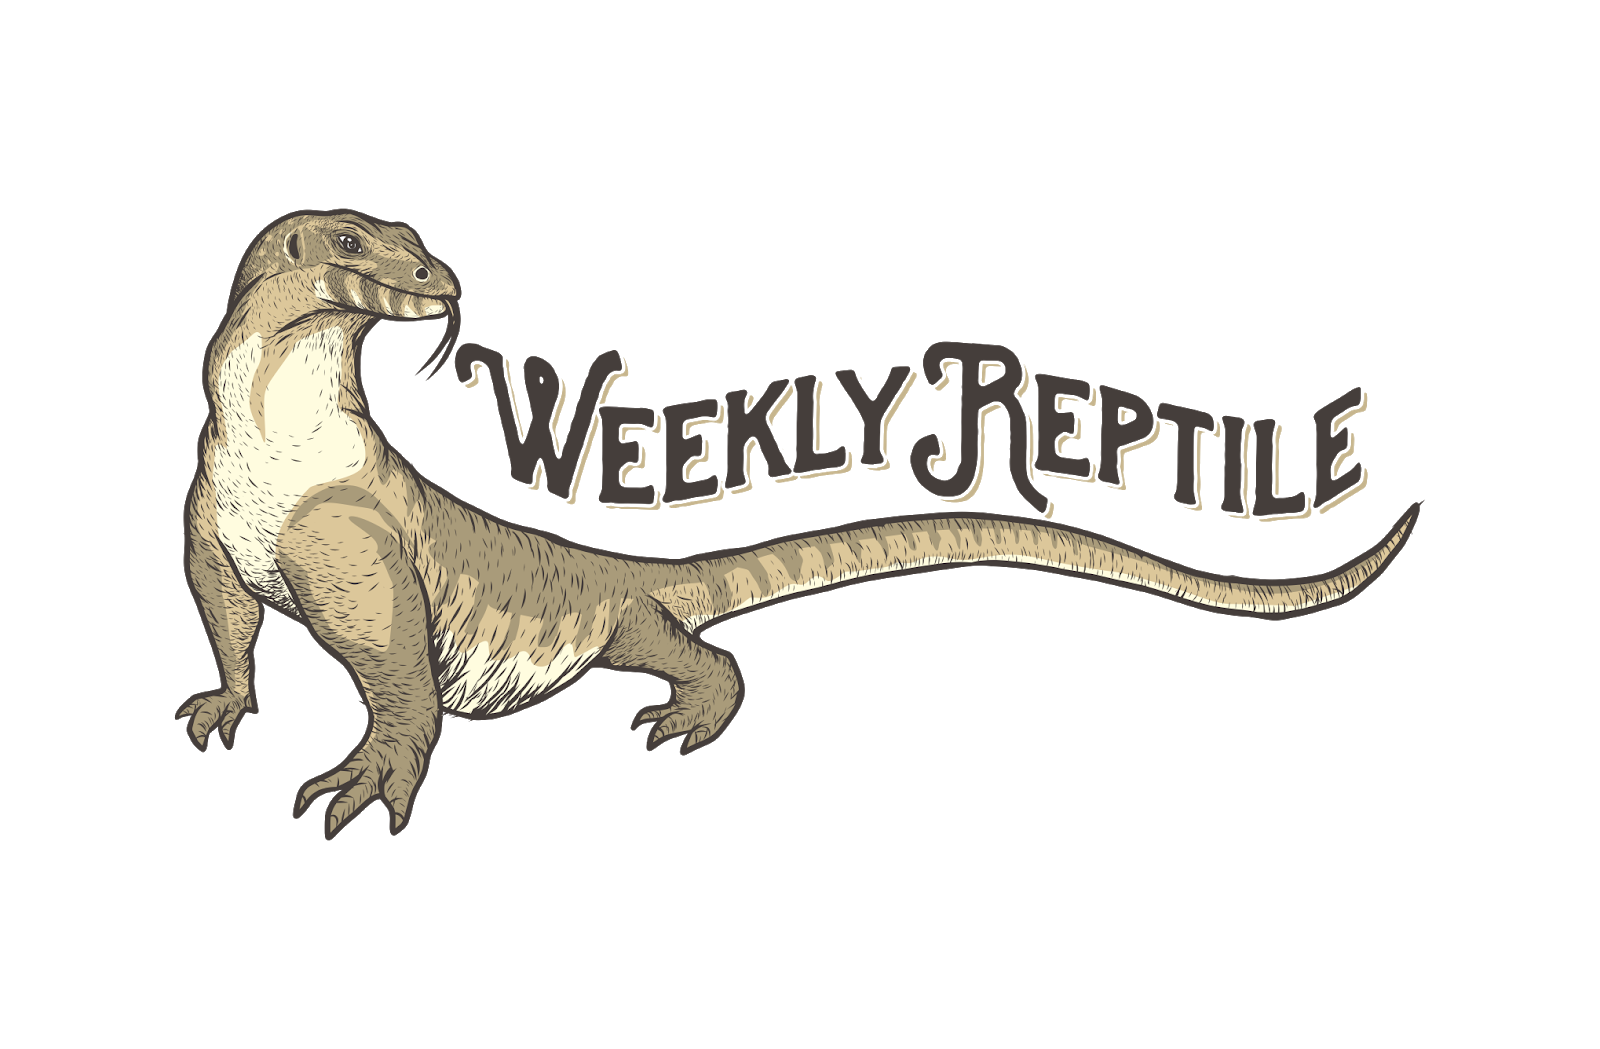 Weekly Reptile